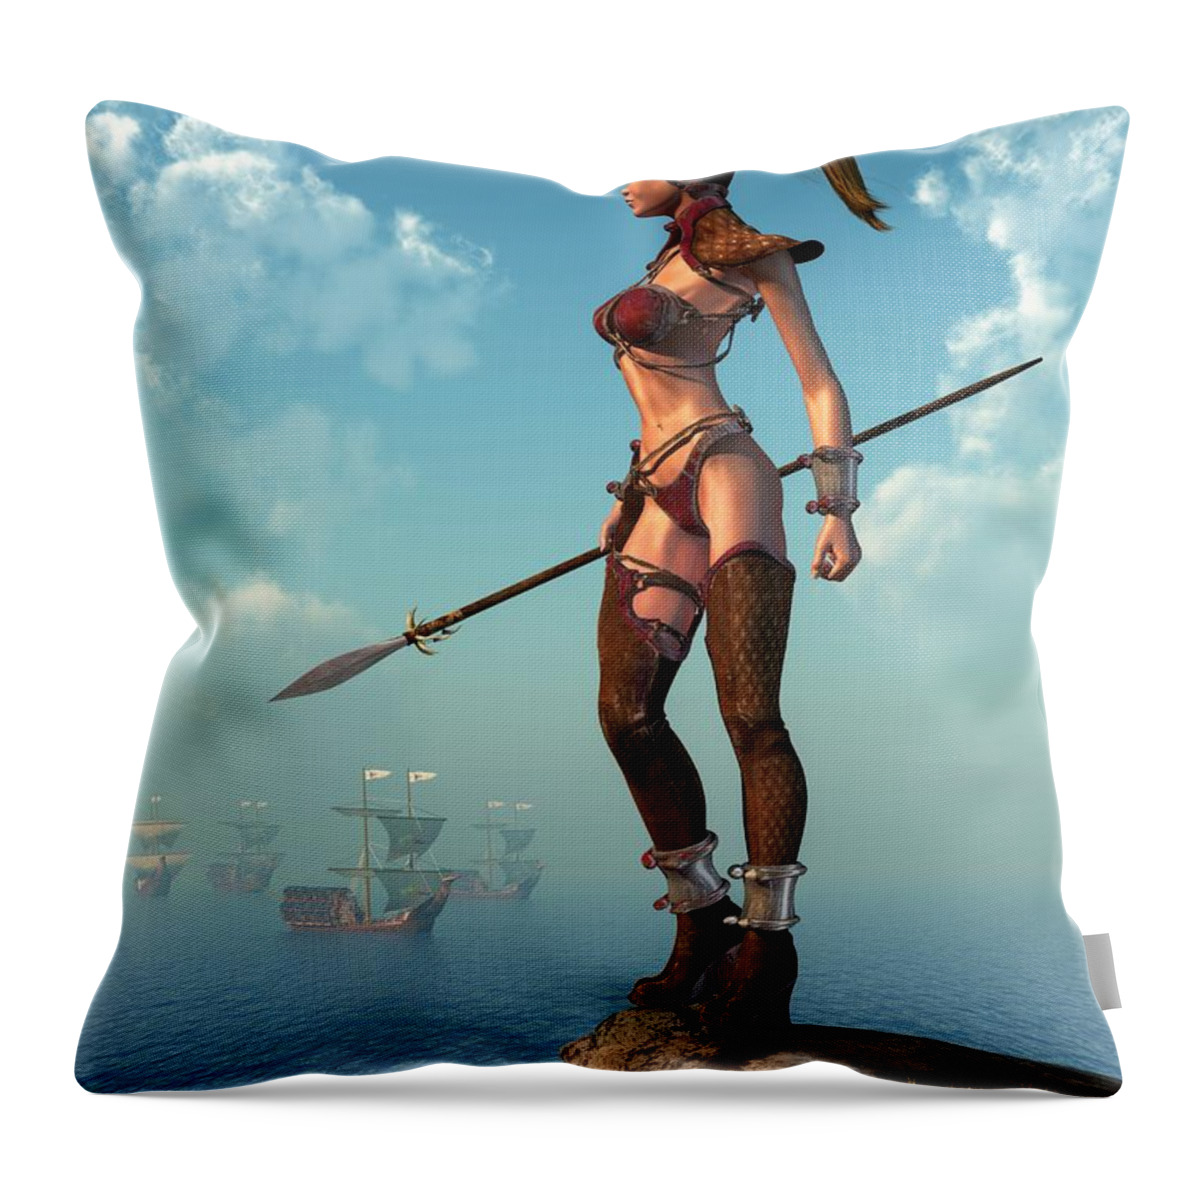 Coast Guard Throw Pillow featuring the digital art Fantasy Coast Guard by Kaylee Mason